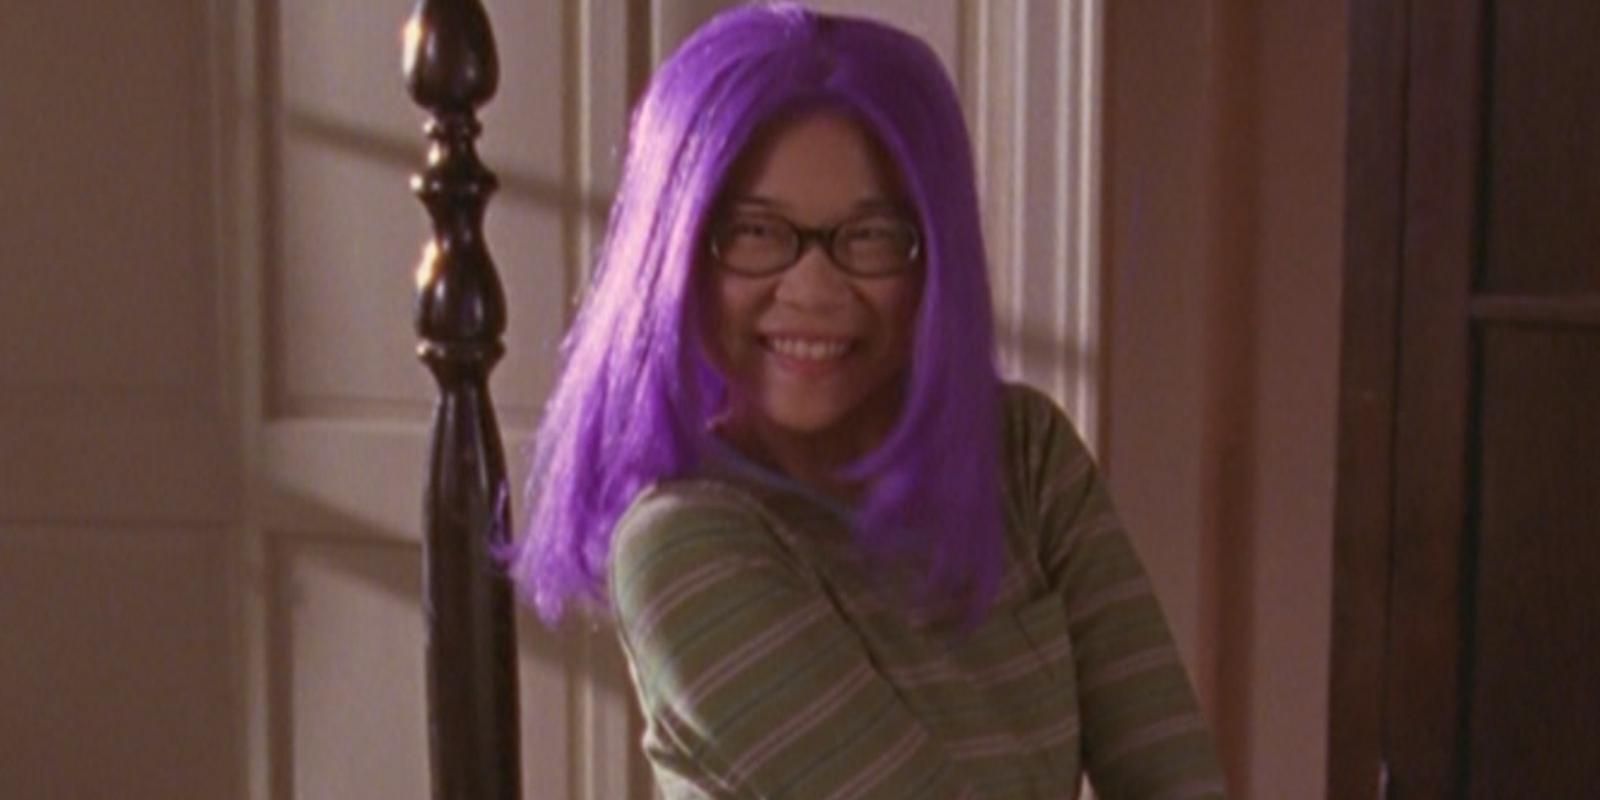 Lane Kim with her hair dyed purple in season 3 of Gilmore Girls